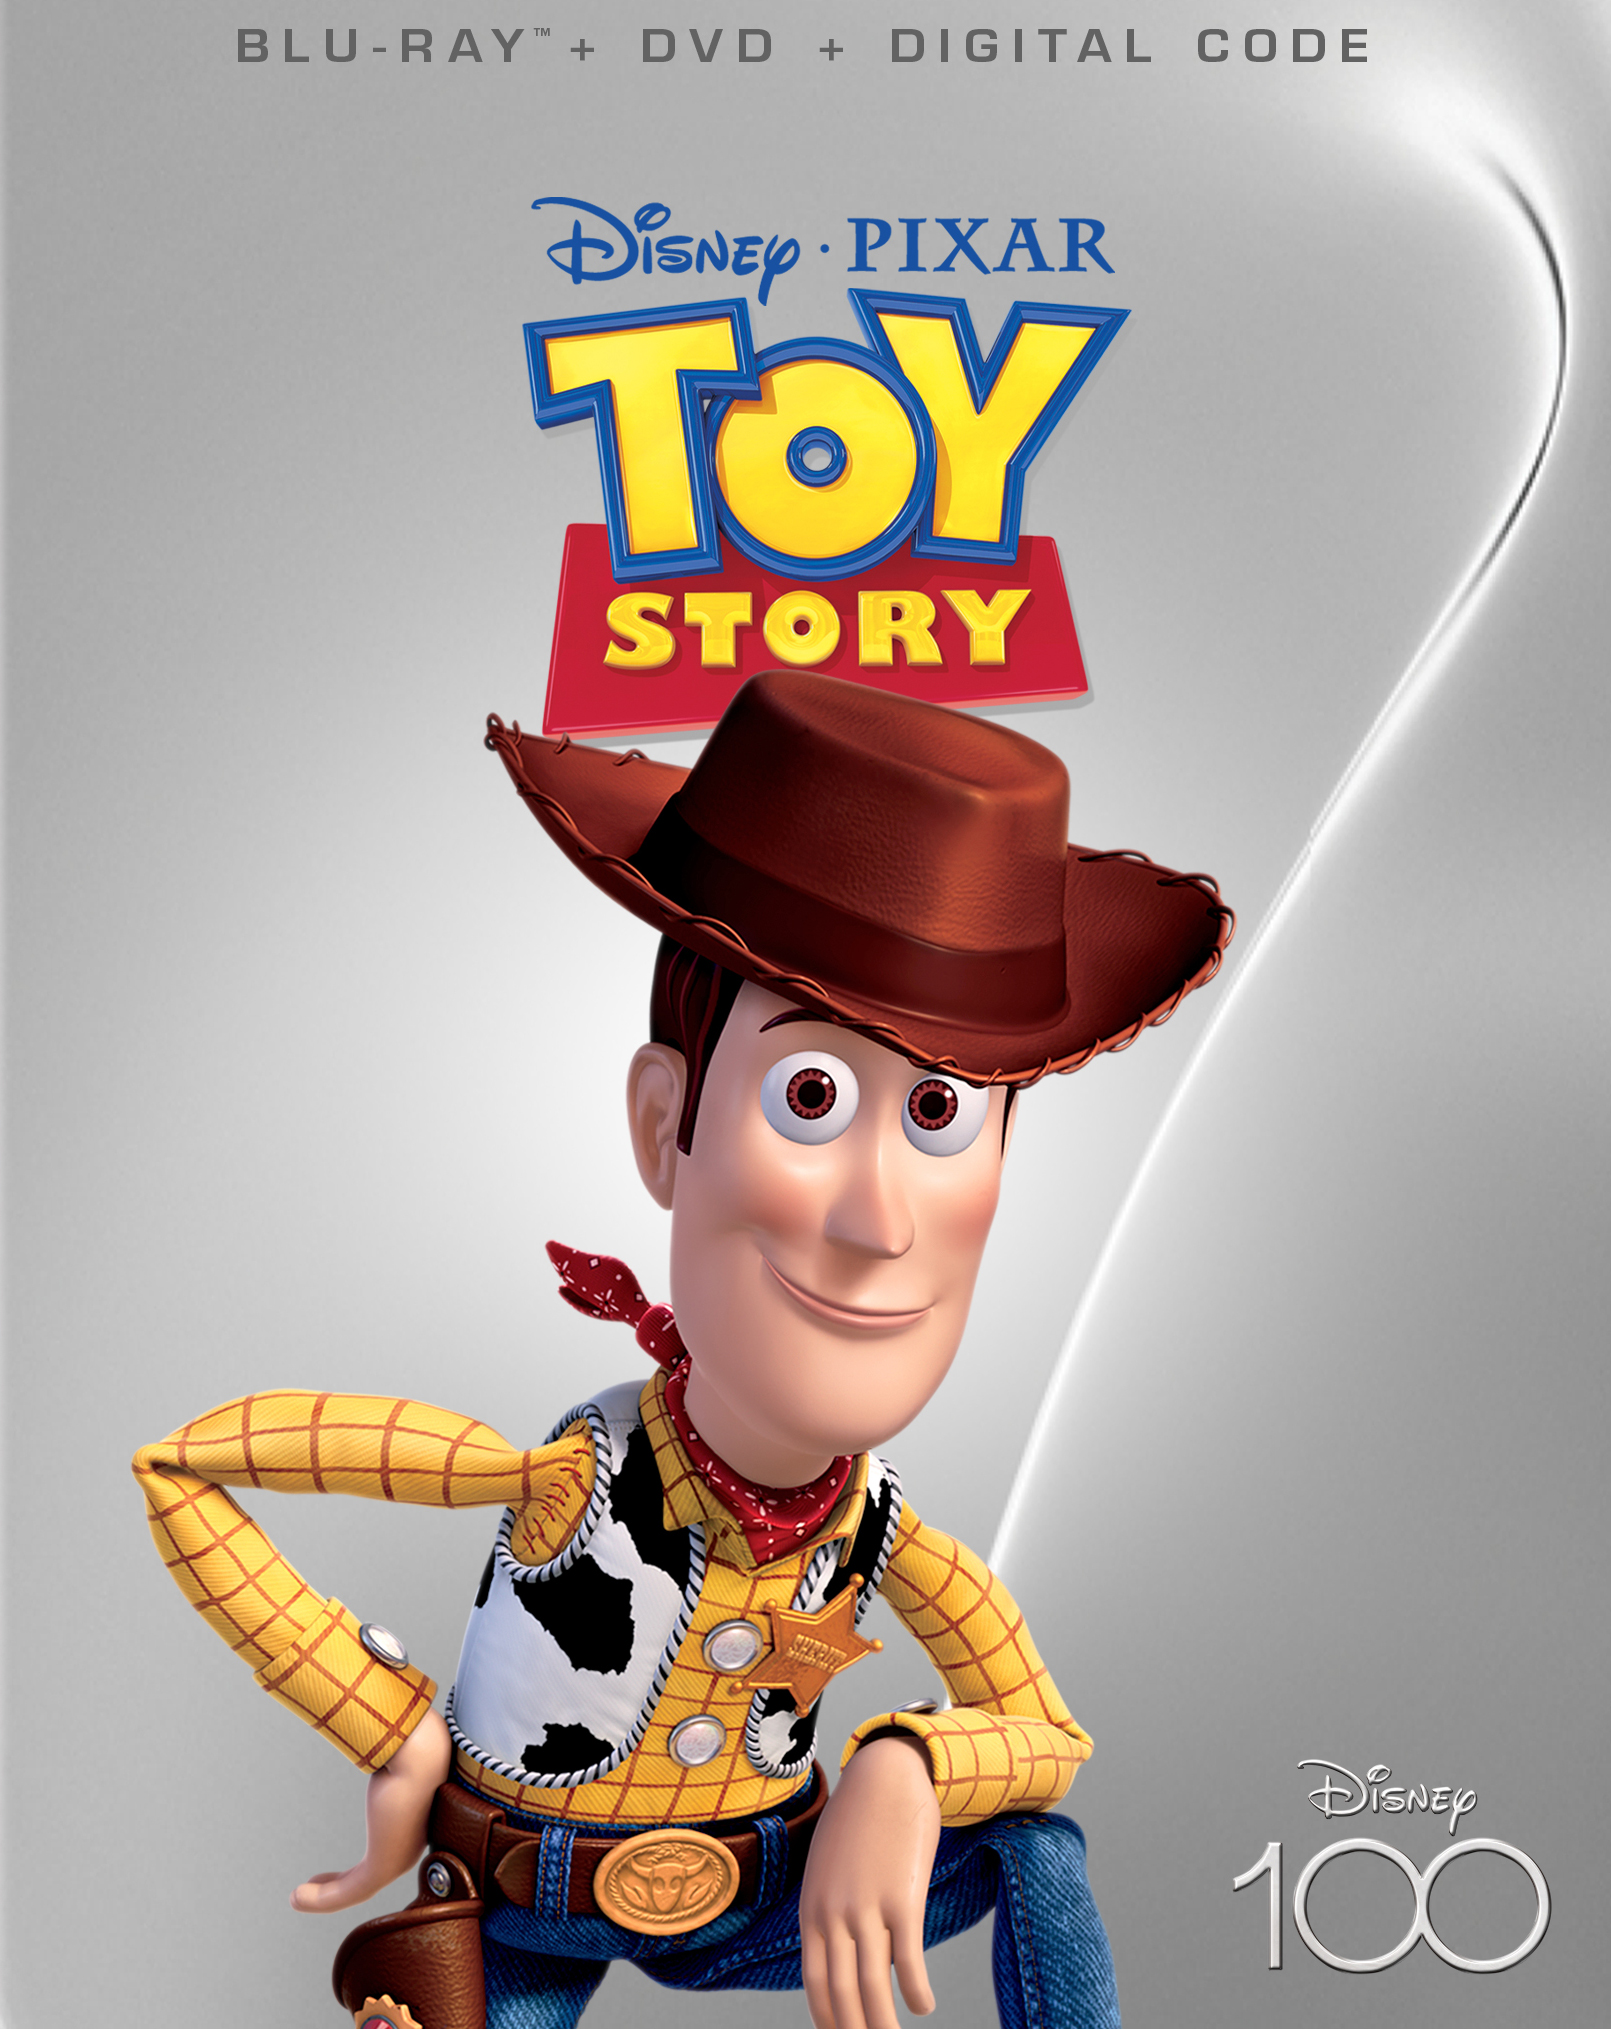 Toy Story 3 (Blu-ray + DVD + Digital Copy)